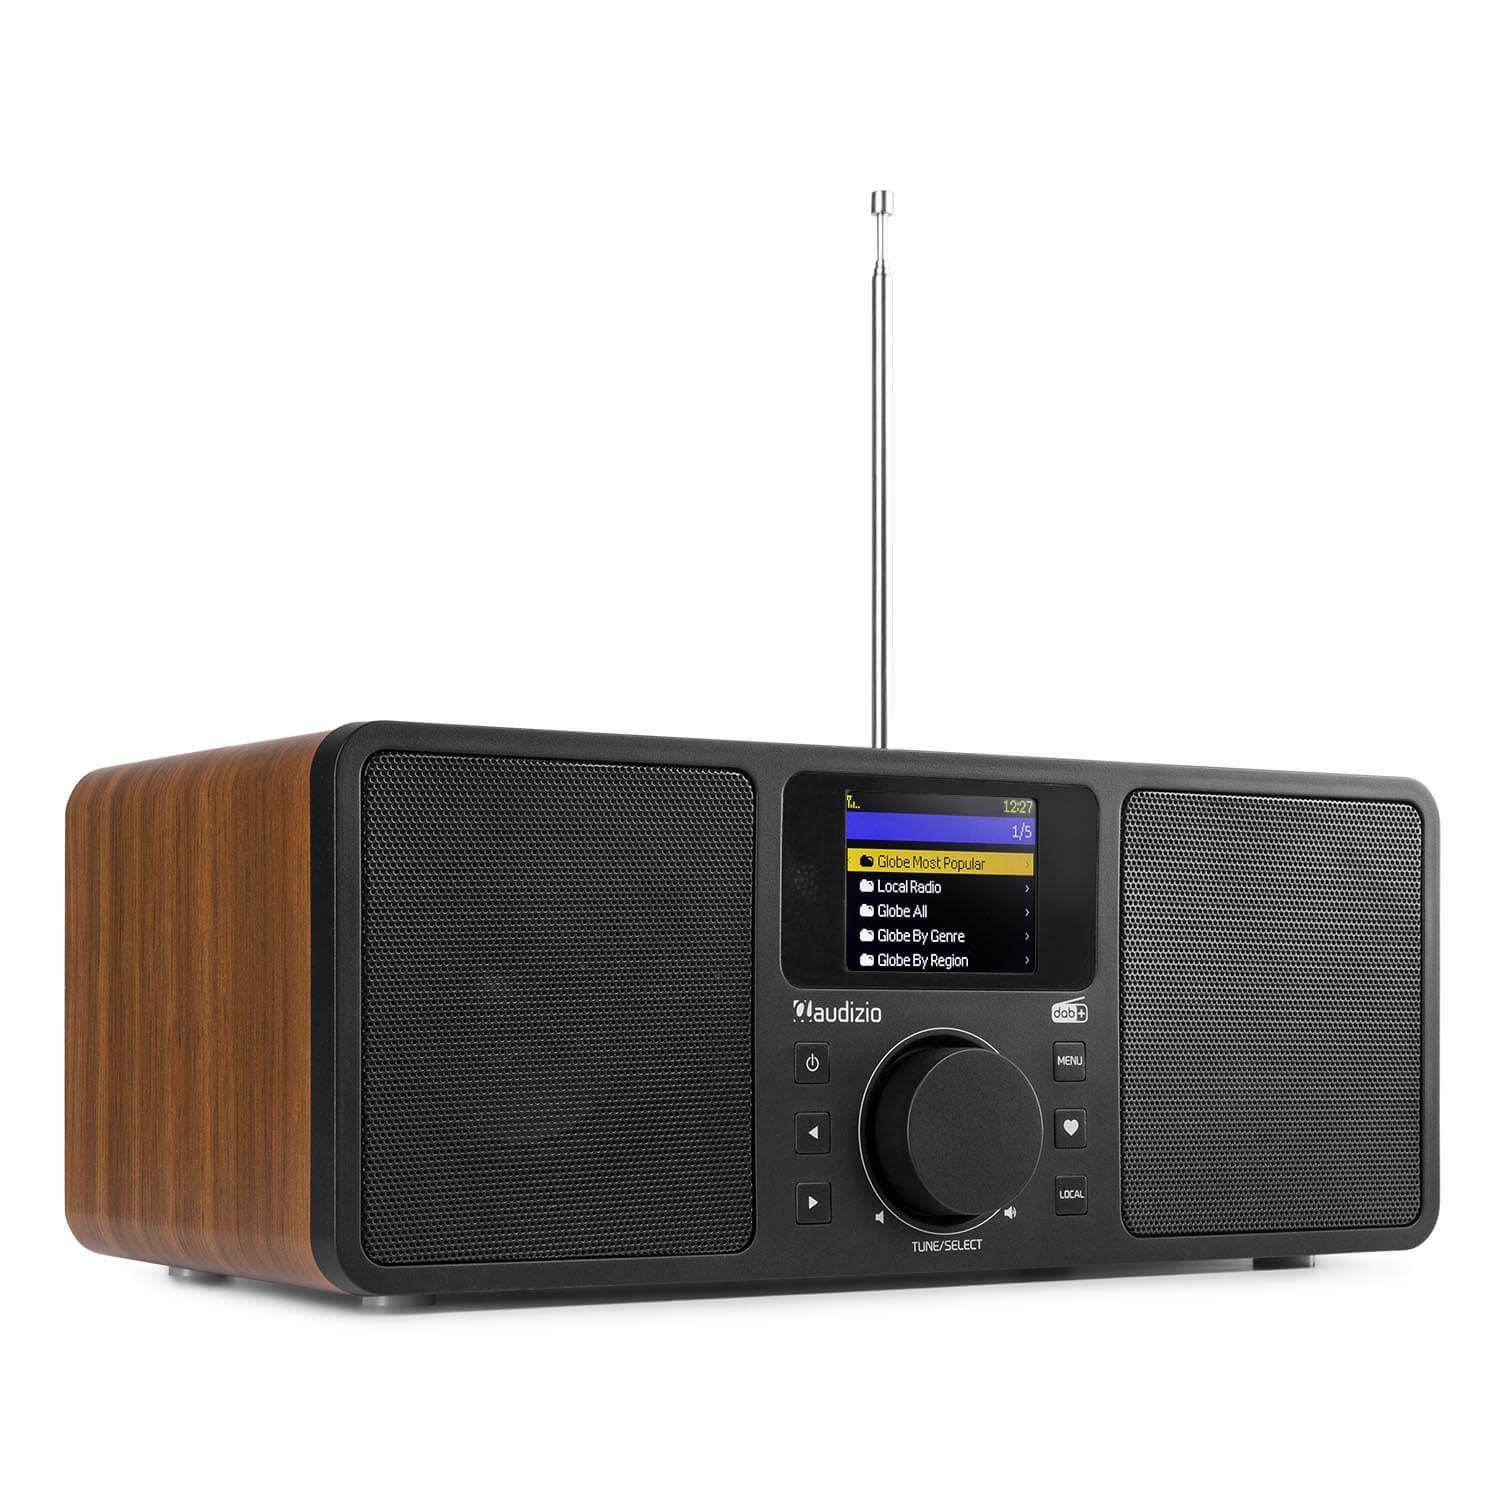 Vertolking conjunctie Schaap Audizio Rome DAB radio, internet radio met wifi + Bluetooth - Hout kopen?